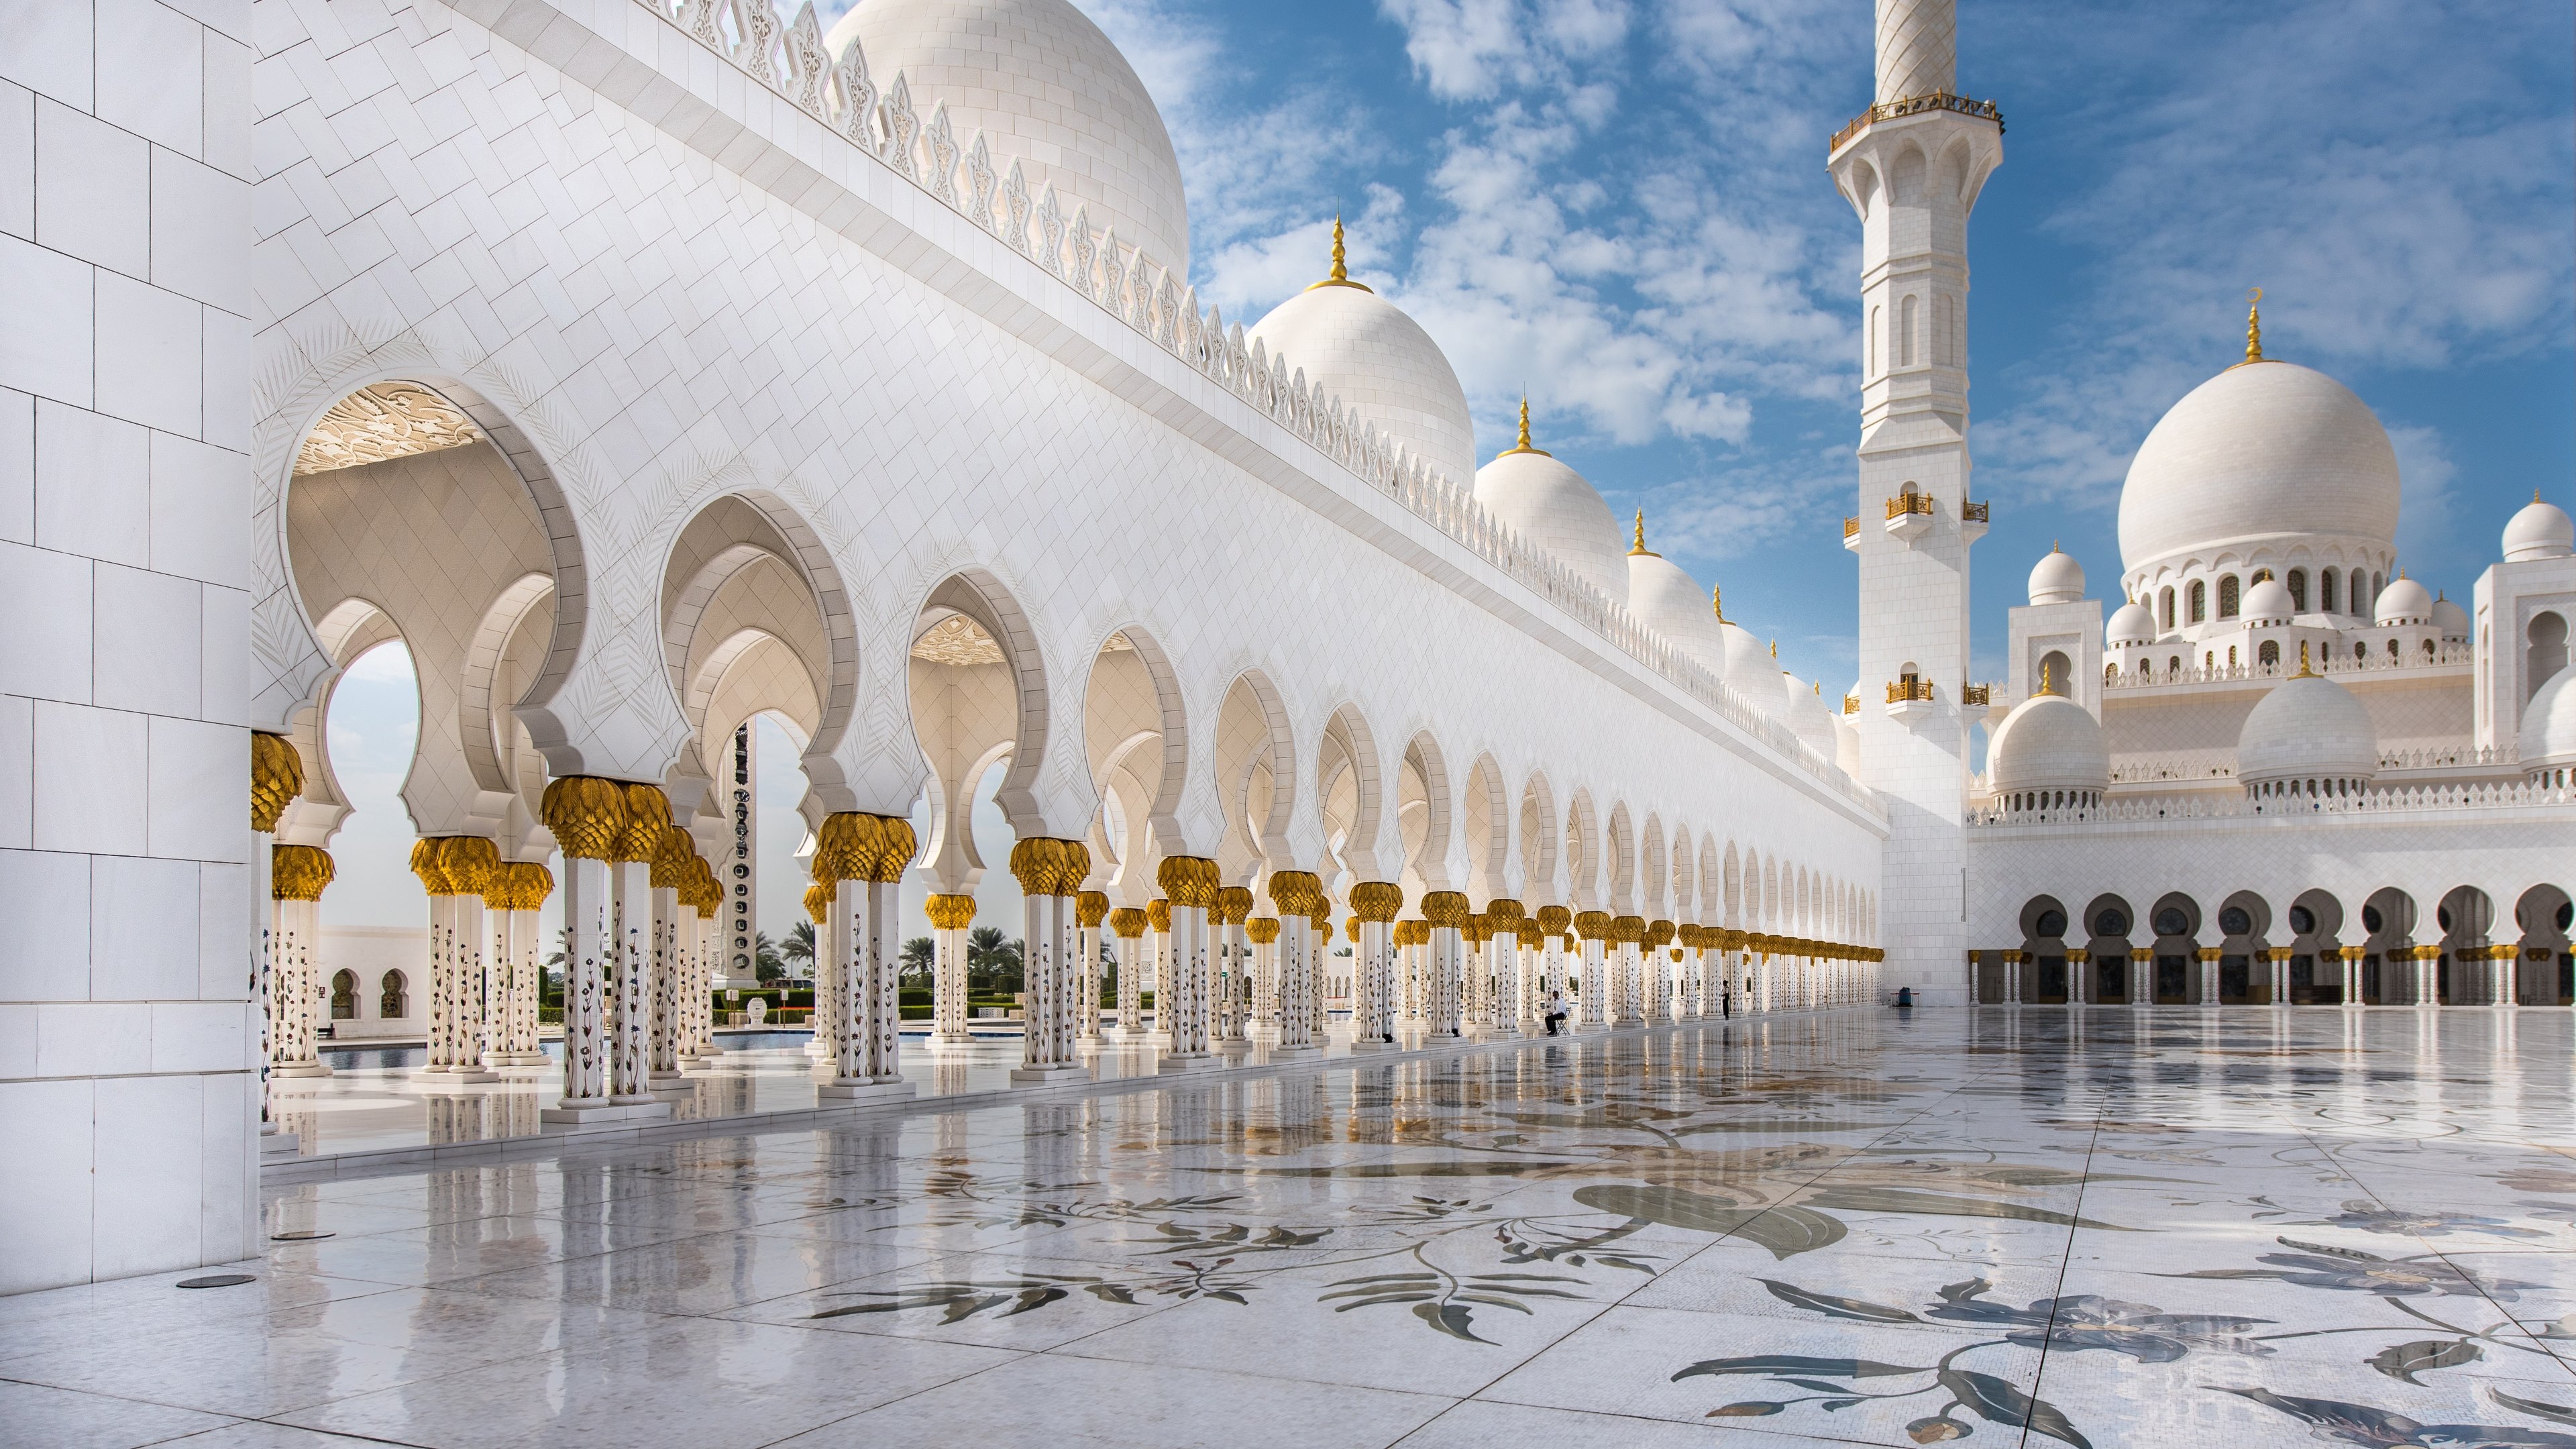 Wallpaper Cc0 Abu Dhabi Mosque Sheikh Zayed Grand Center